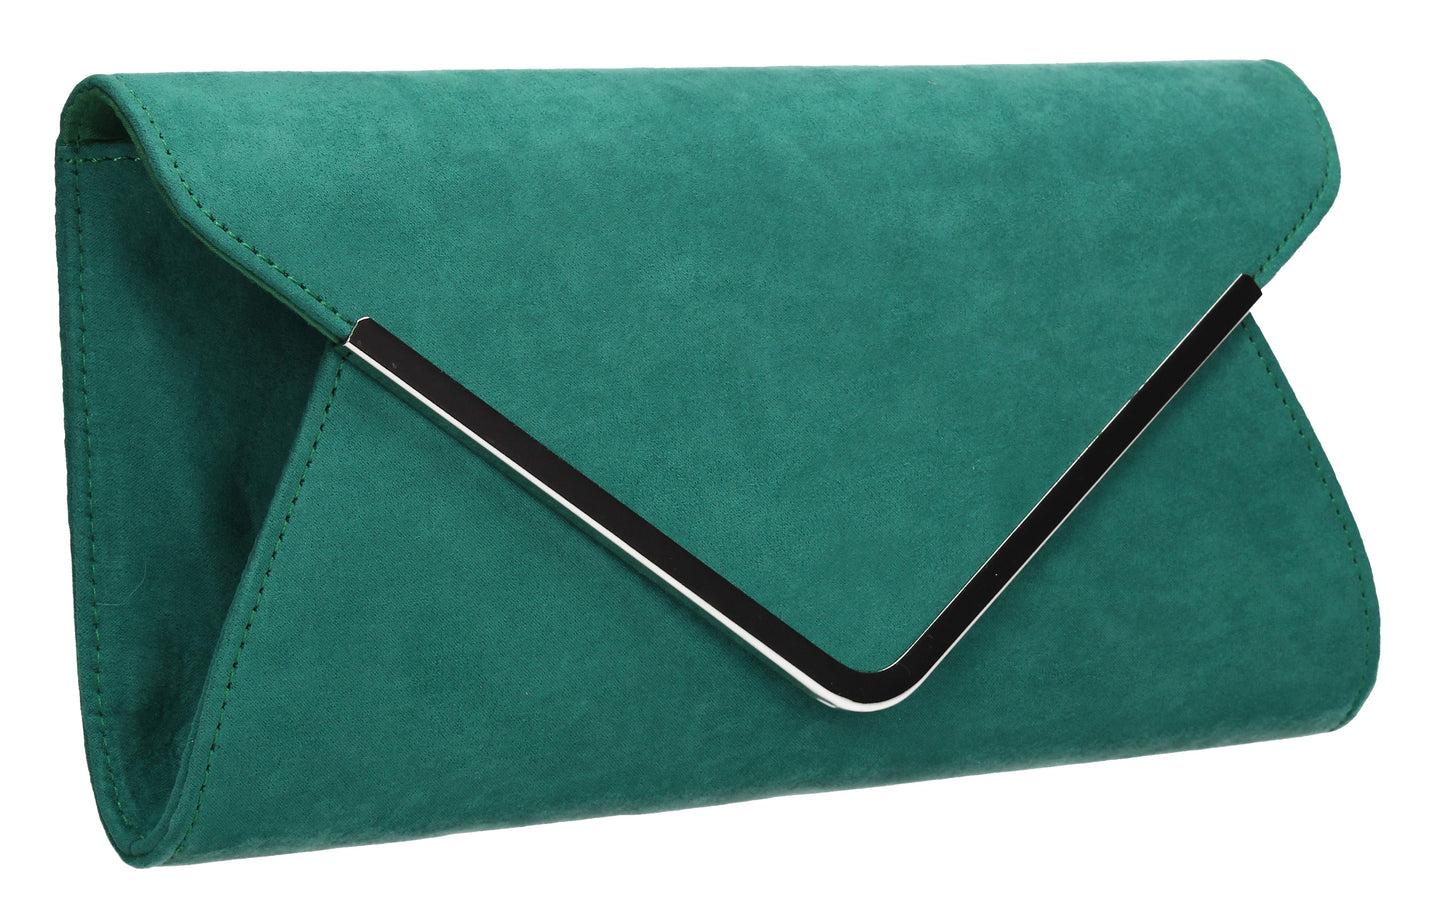 SWANKYSWANS Karlie Suede Clutch Bag Green Cute Cheap Clutch Bag For Weddings School and Work